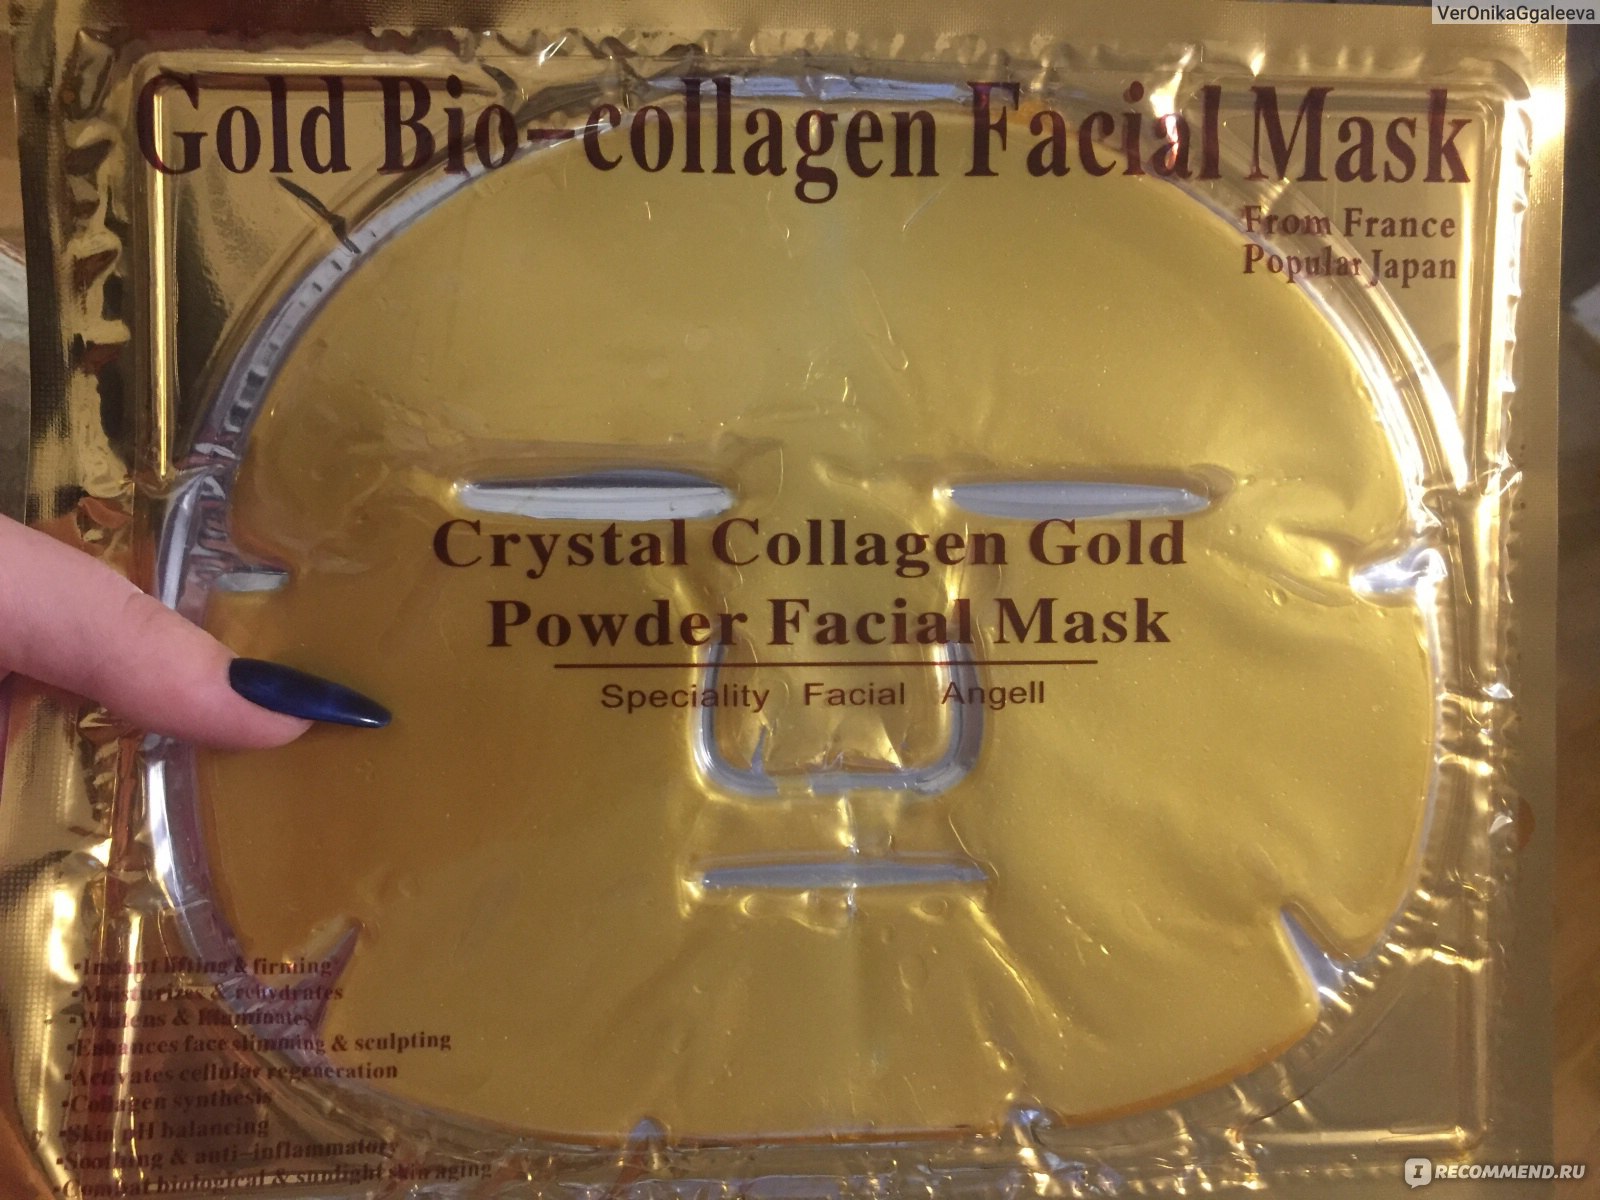 Bio collagen real deep mask. Gold Bio Collagen Mask. Золотая коллагеновая маска для лица Gold Bio-Collagen facial Mask. Images маска – пленка с золотом и коллагеном, 60гр. Japan Gold маска.